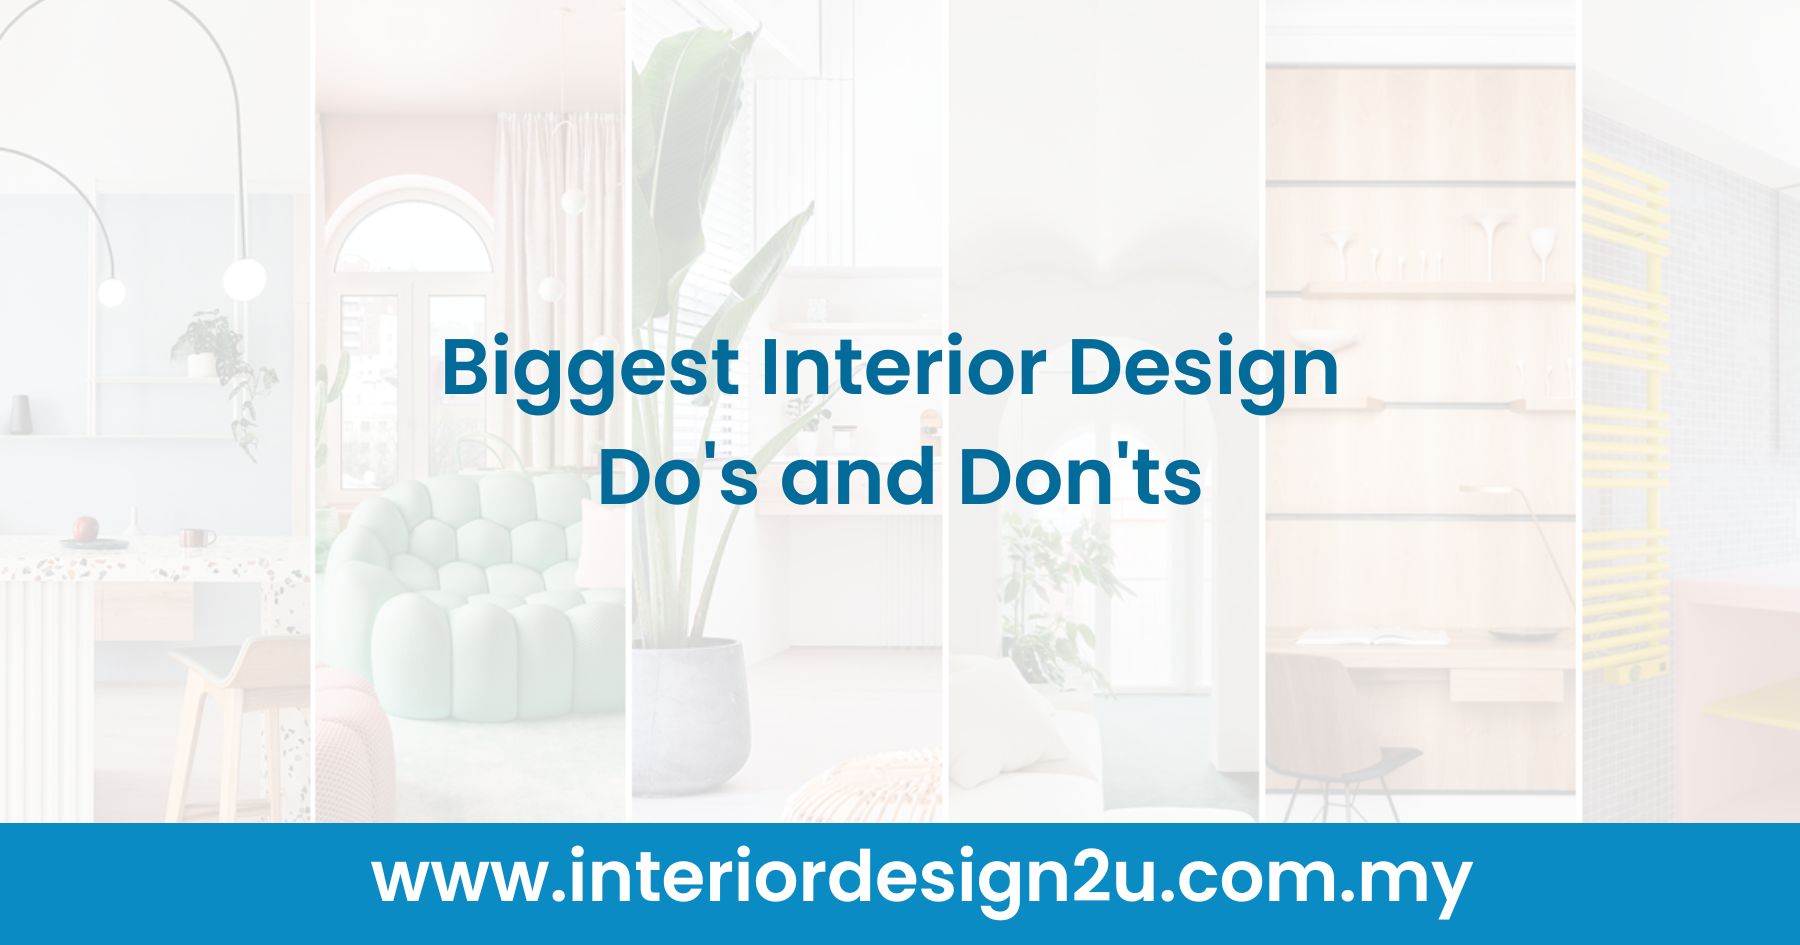 Biggest Interior Design Do's and Don'ts